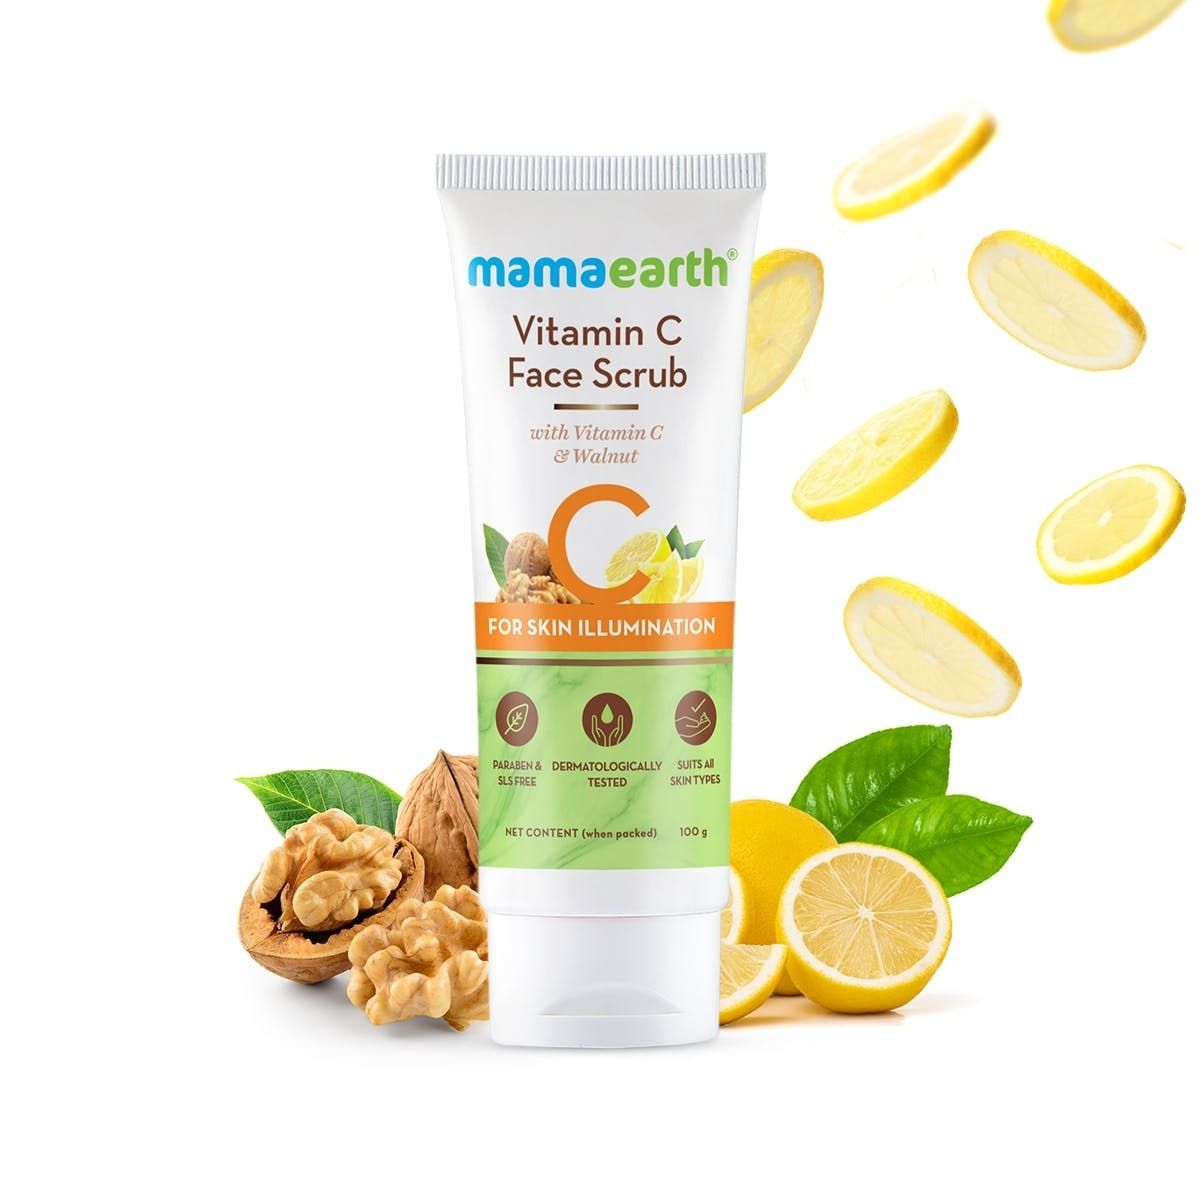 Mamaearth Vitamin C Face Scrub With Vitamin C And Walnut For Skin illumination,100g